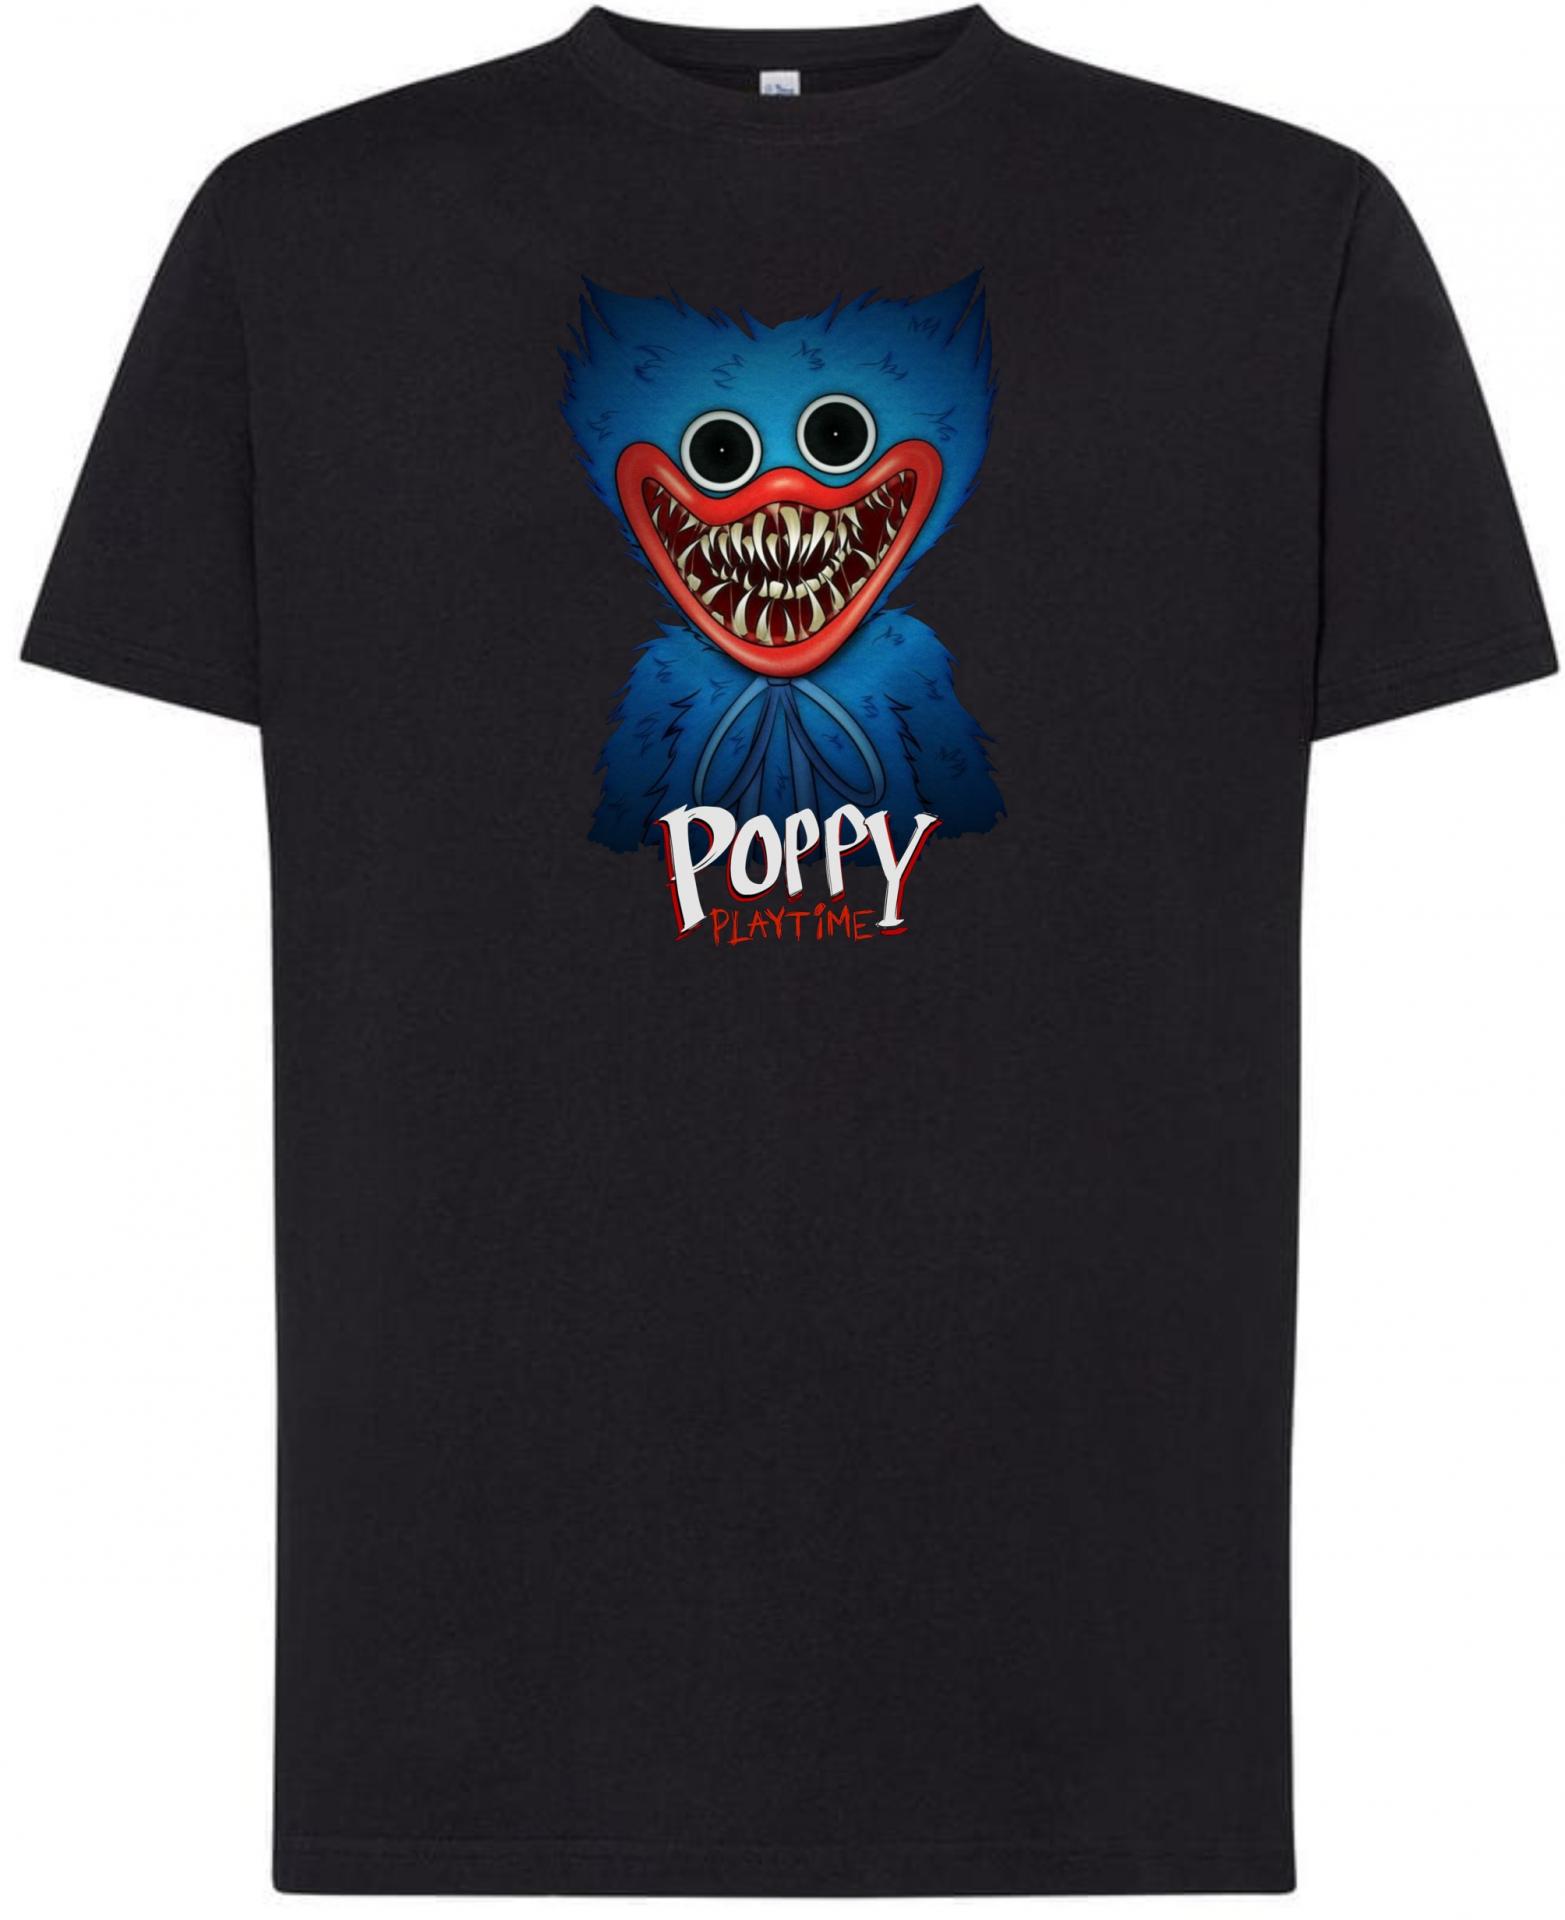 Camiseta Poppy Play Time